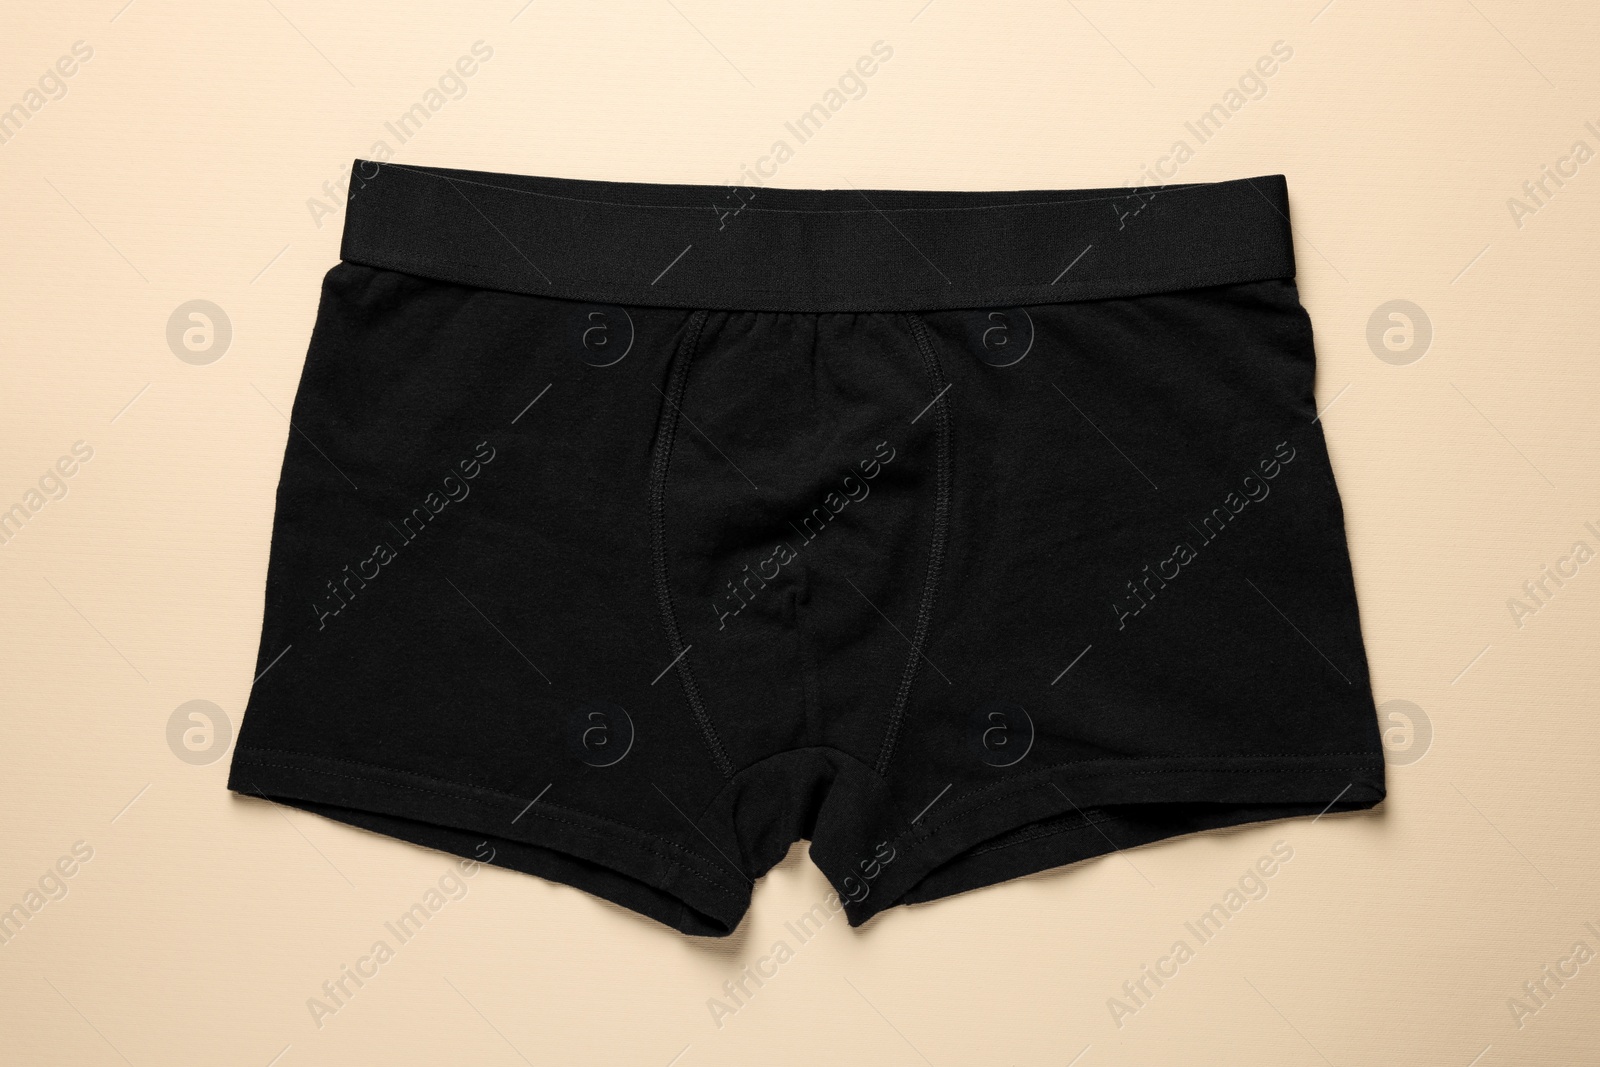 Photo of Comfortable black men's underwear on beige background, top view